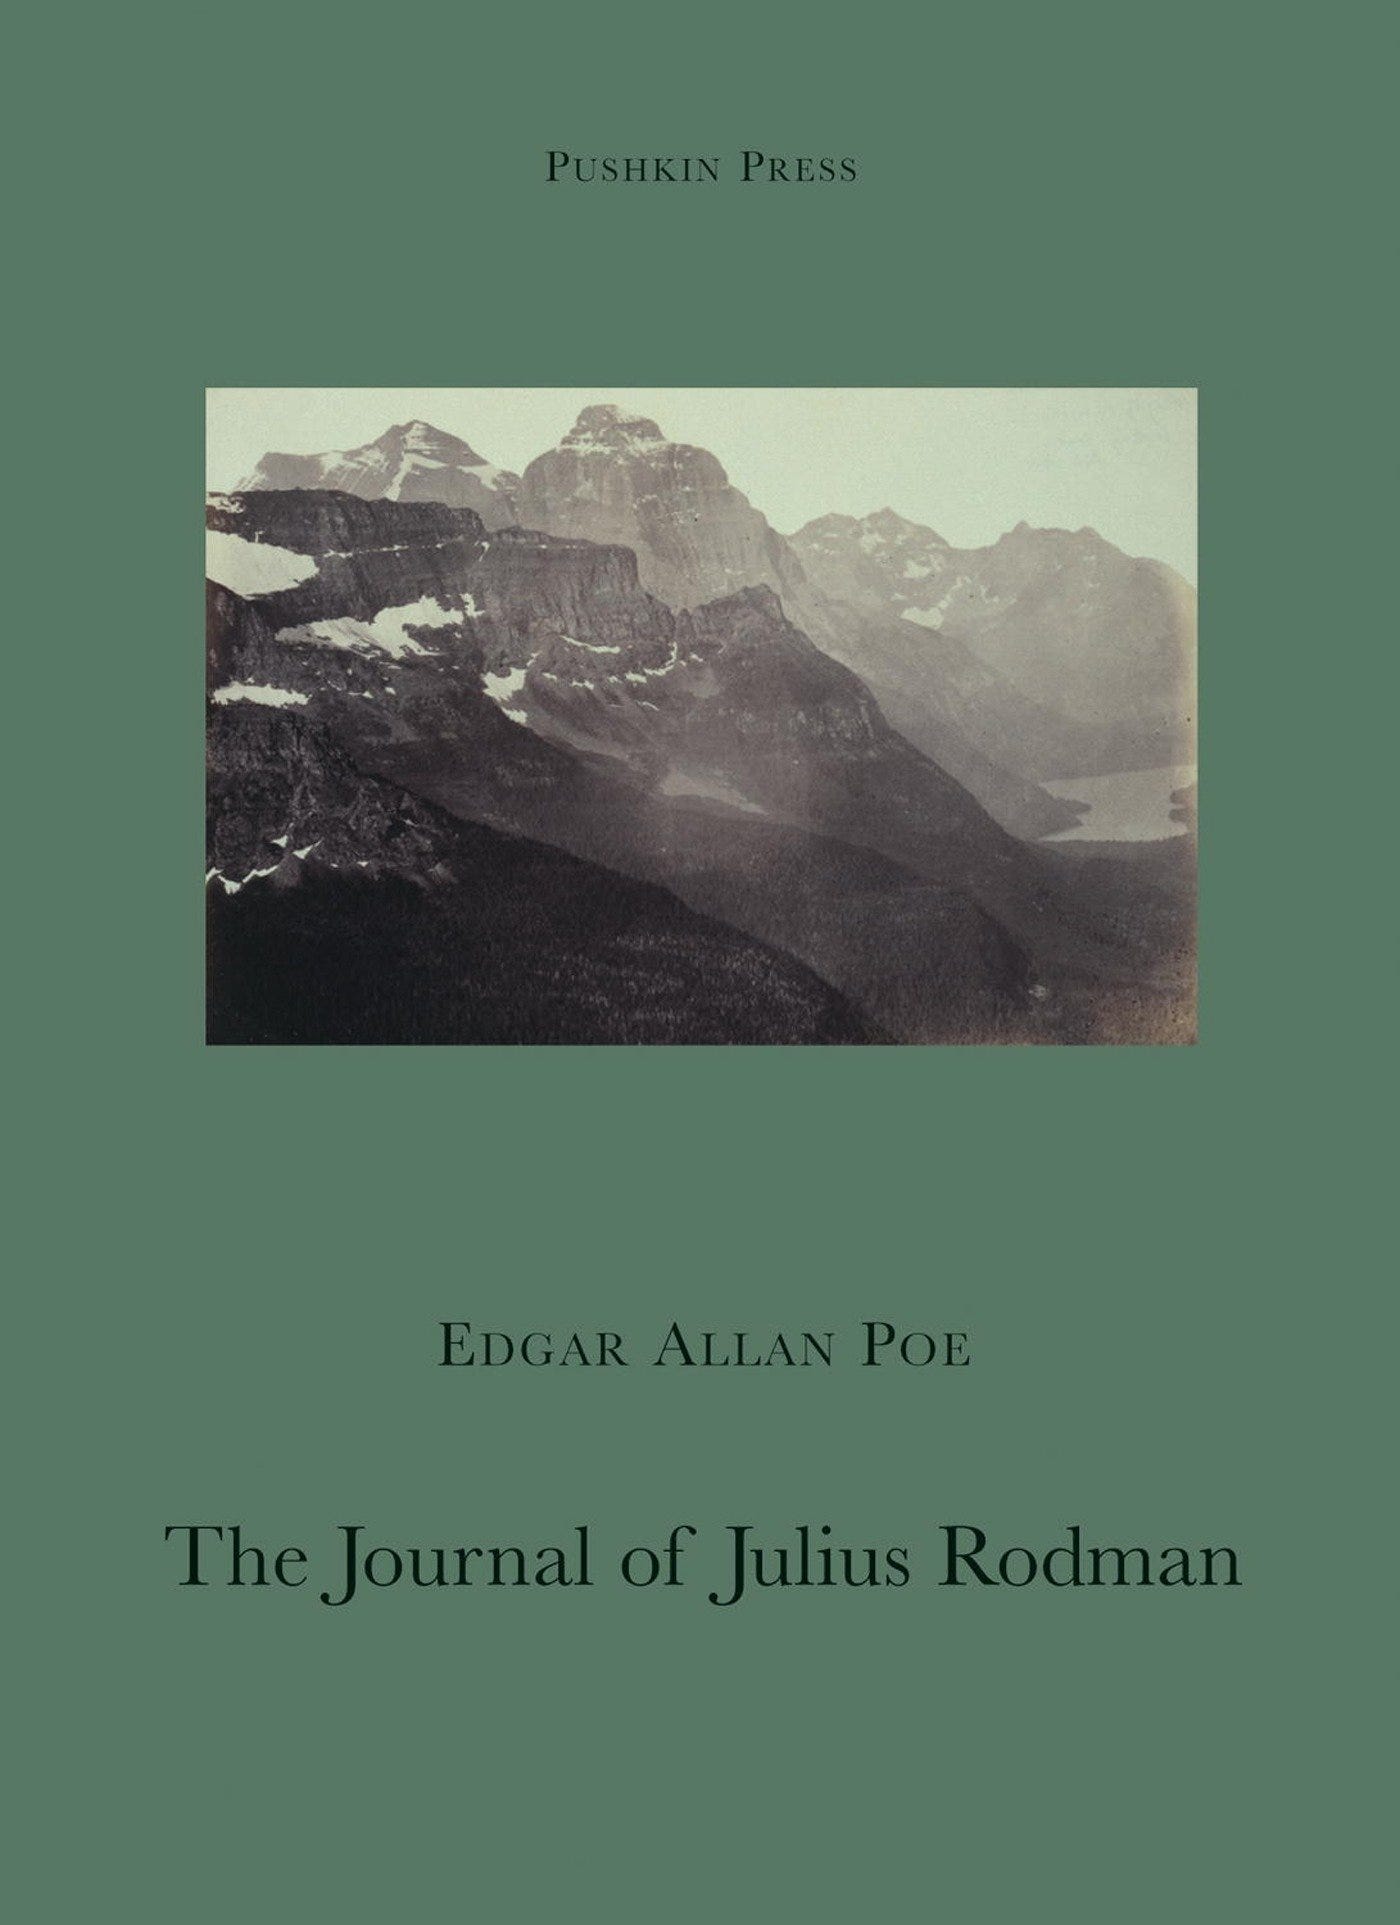 Amazon.com: The Journal of Julius Rodman (Pushkin Collection)  (9781901285956): Poe, Edgar Allan, David, Michael: Books